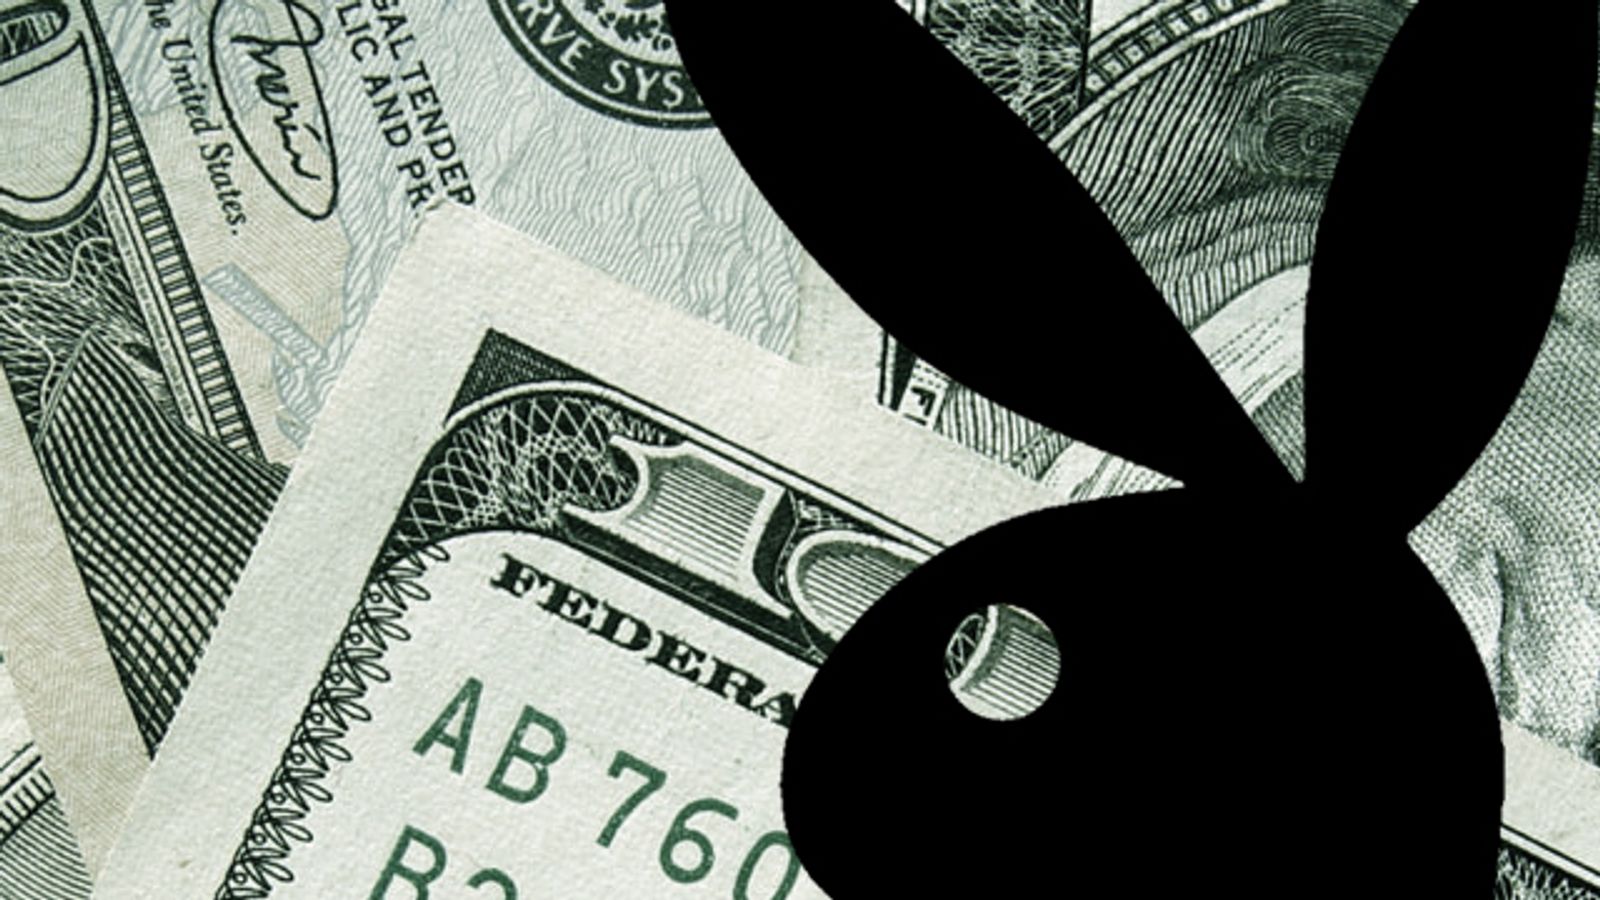 Playboy Increasing Online Budget